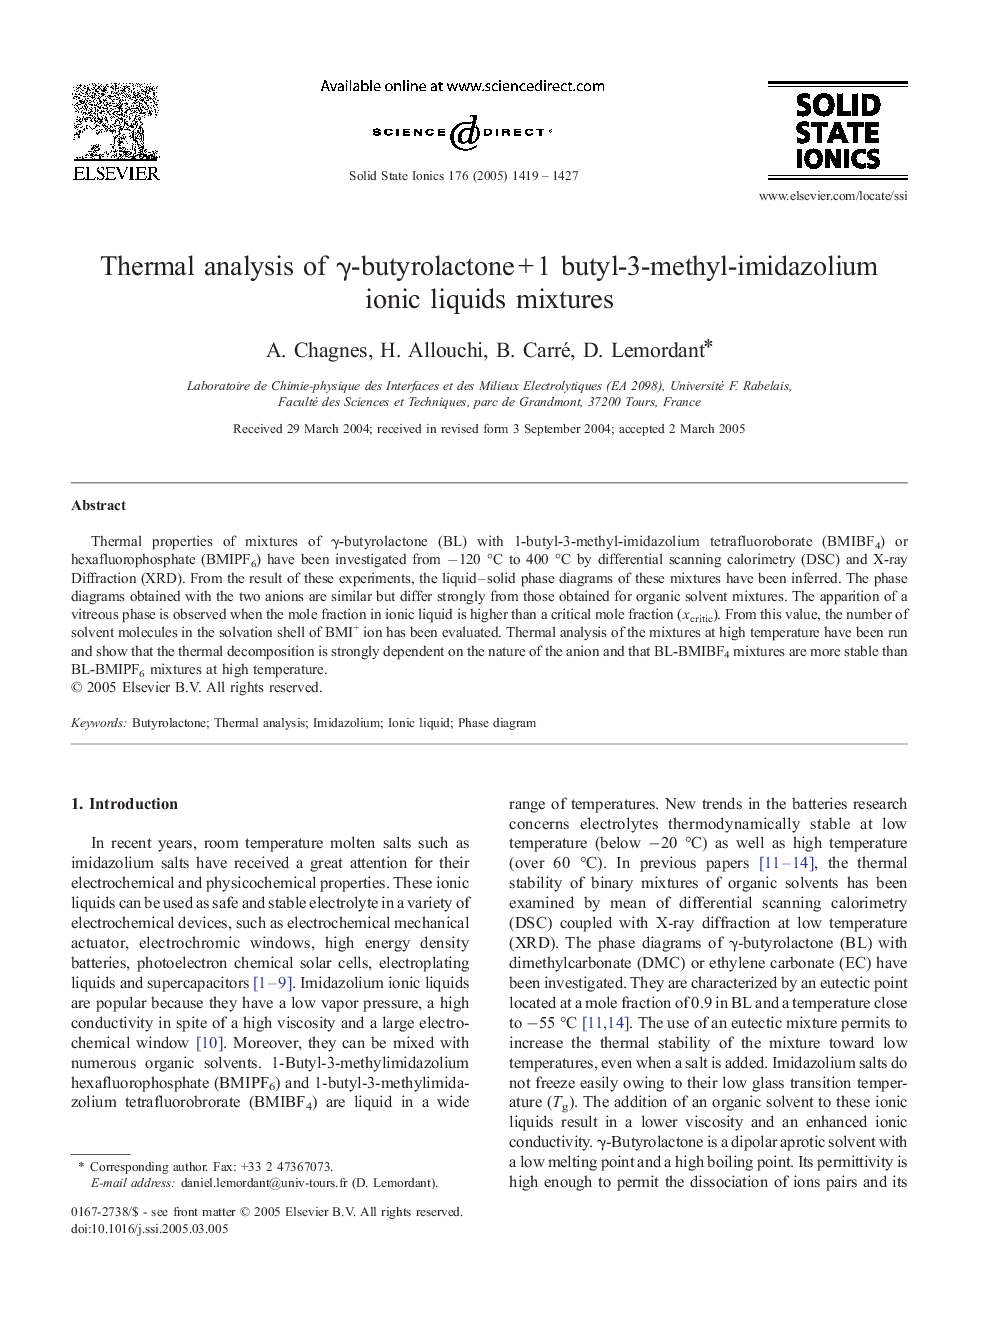 Thermal analysis of Î³-butyrolactoneÂ +Â 1 butyl-3-methyl-imidazolium ionic liquids mixtures